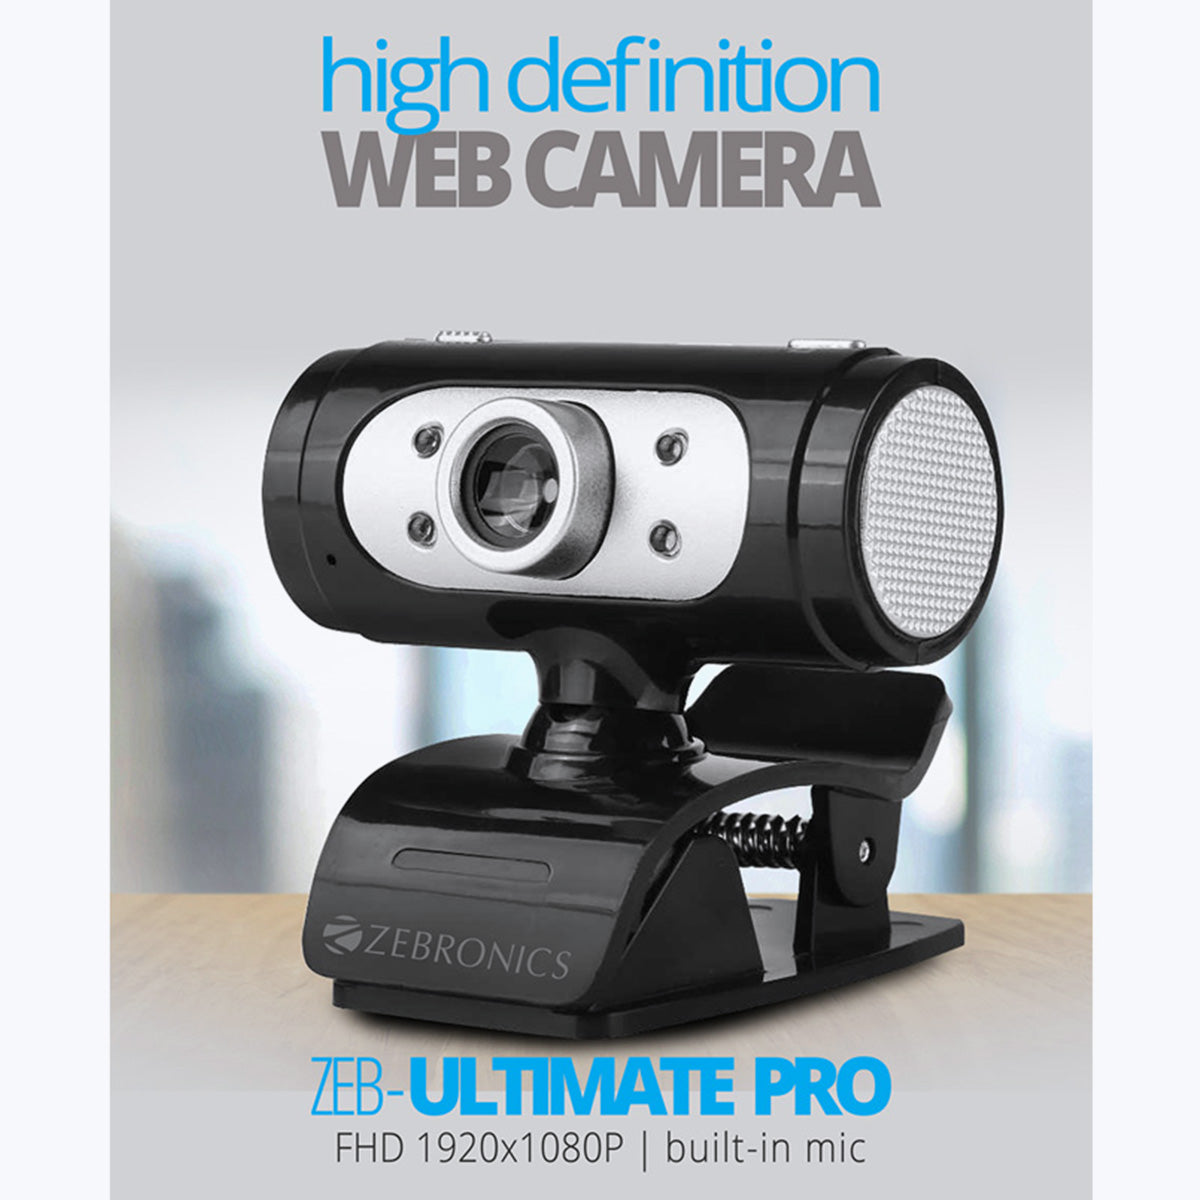 Zeb-Ultimate Pro - Webcameras - Zebronics